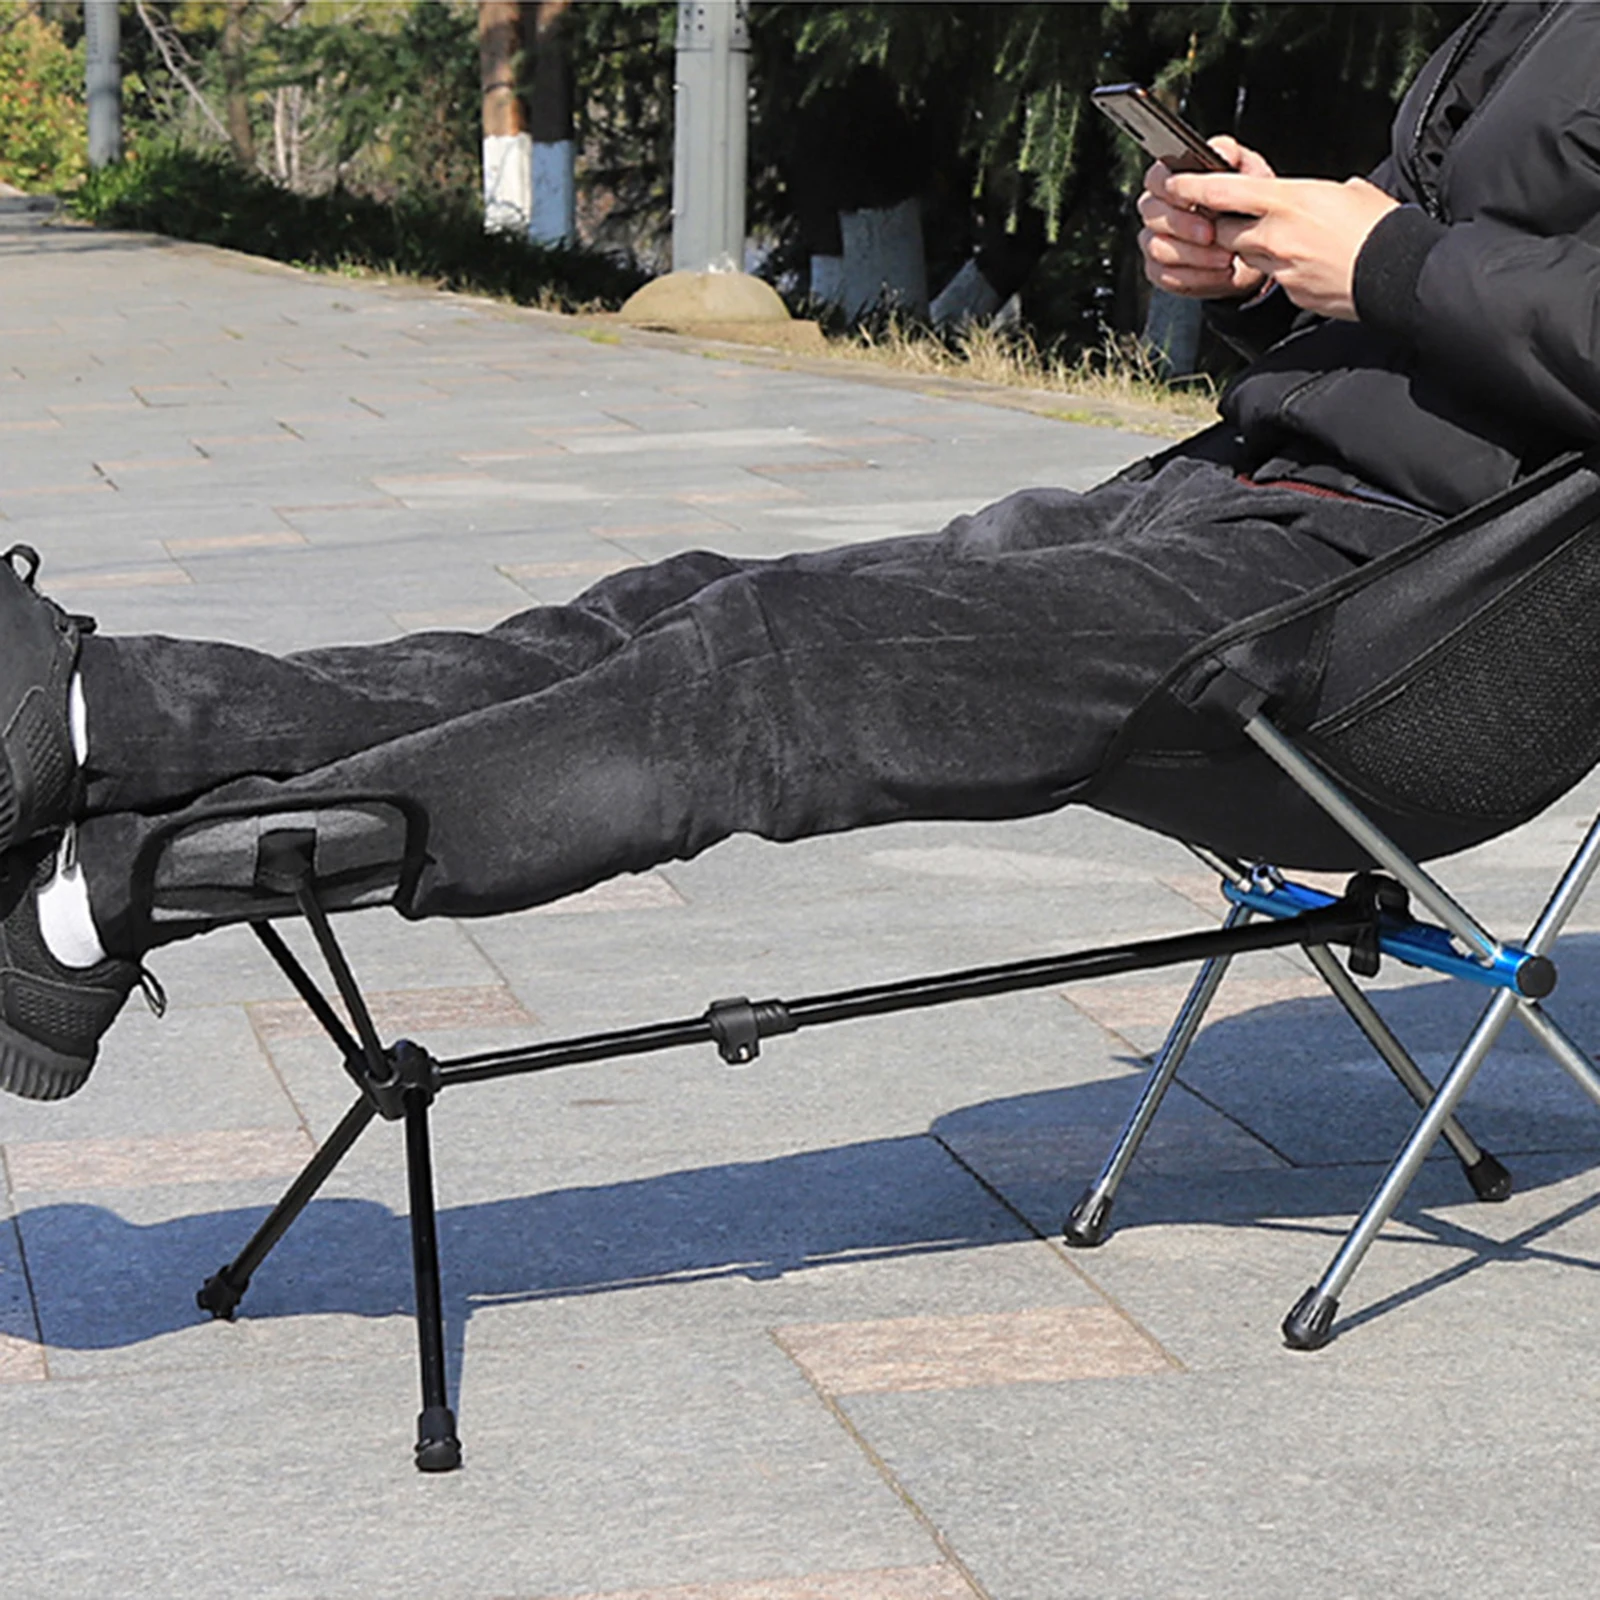 Lightweight Folding Chair Footrest, Anti-slip Camping Fishing Chair Footstool, Outdoor Patio Seat Feet Legs Rest Bracket Stool